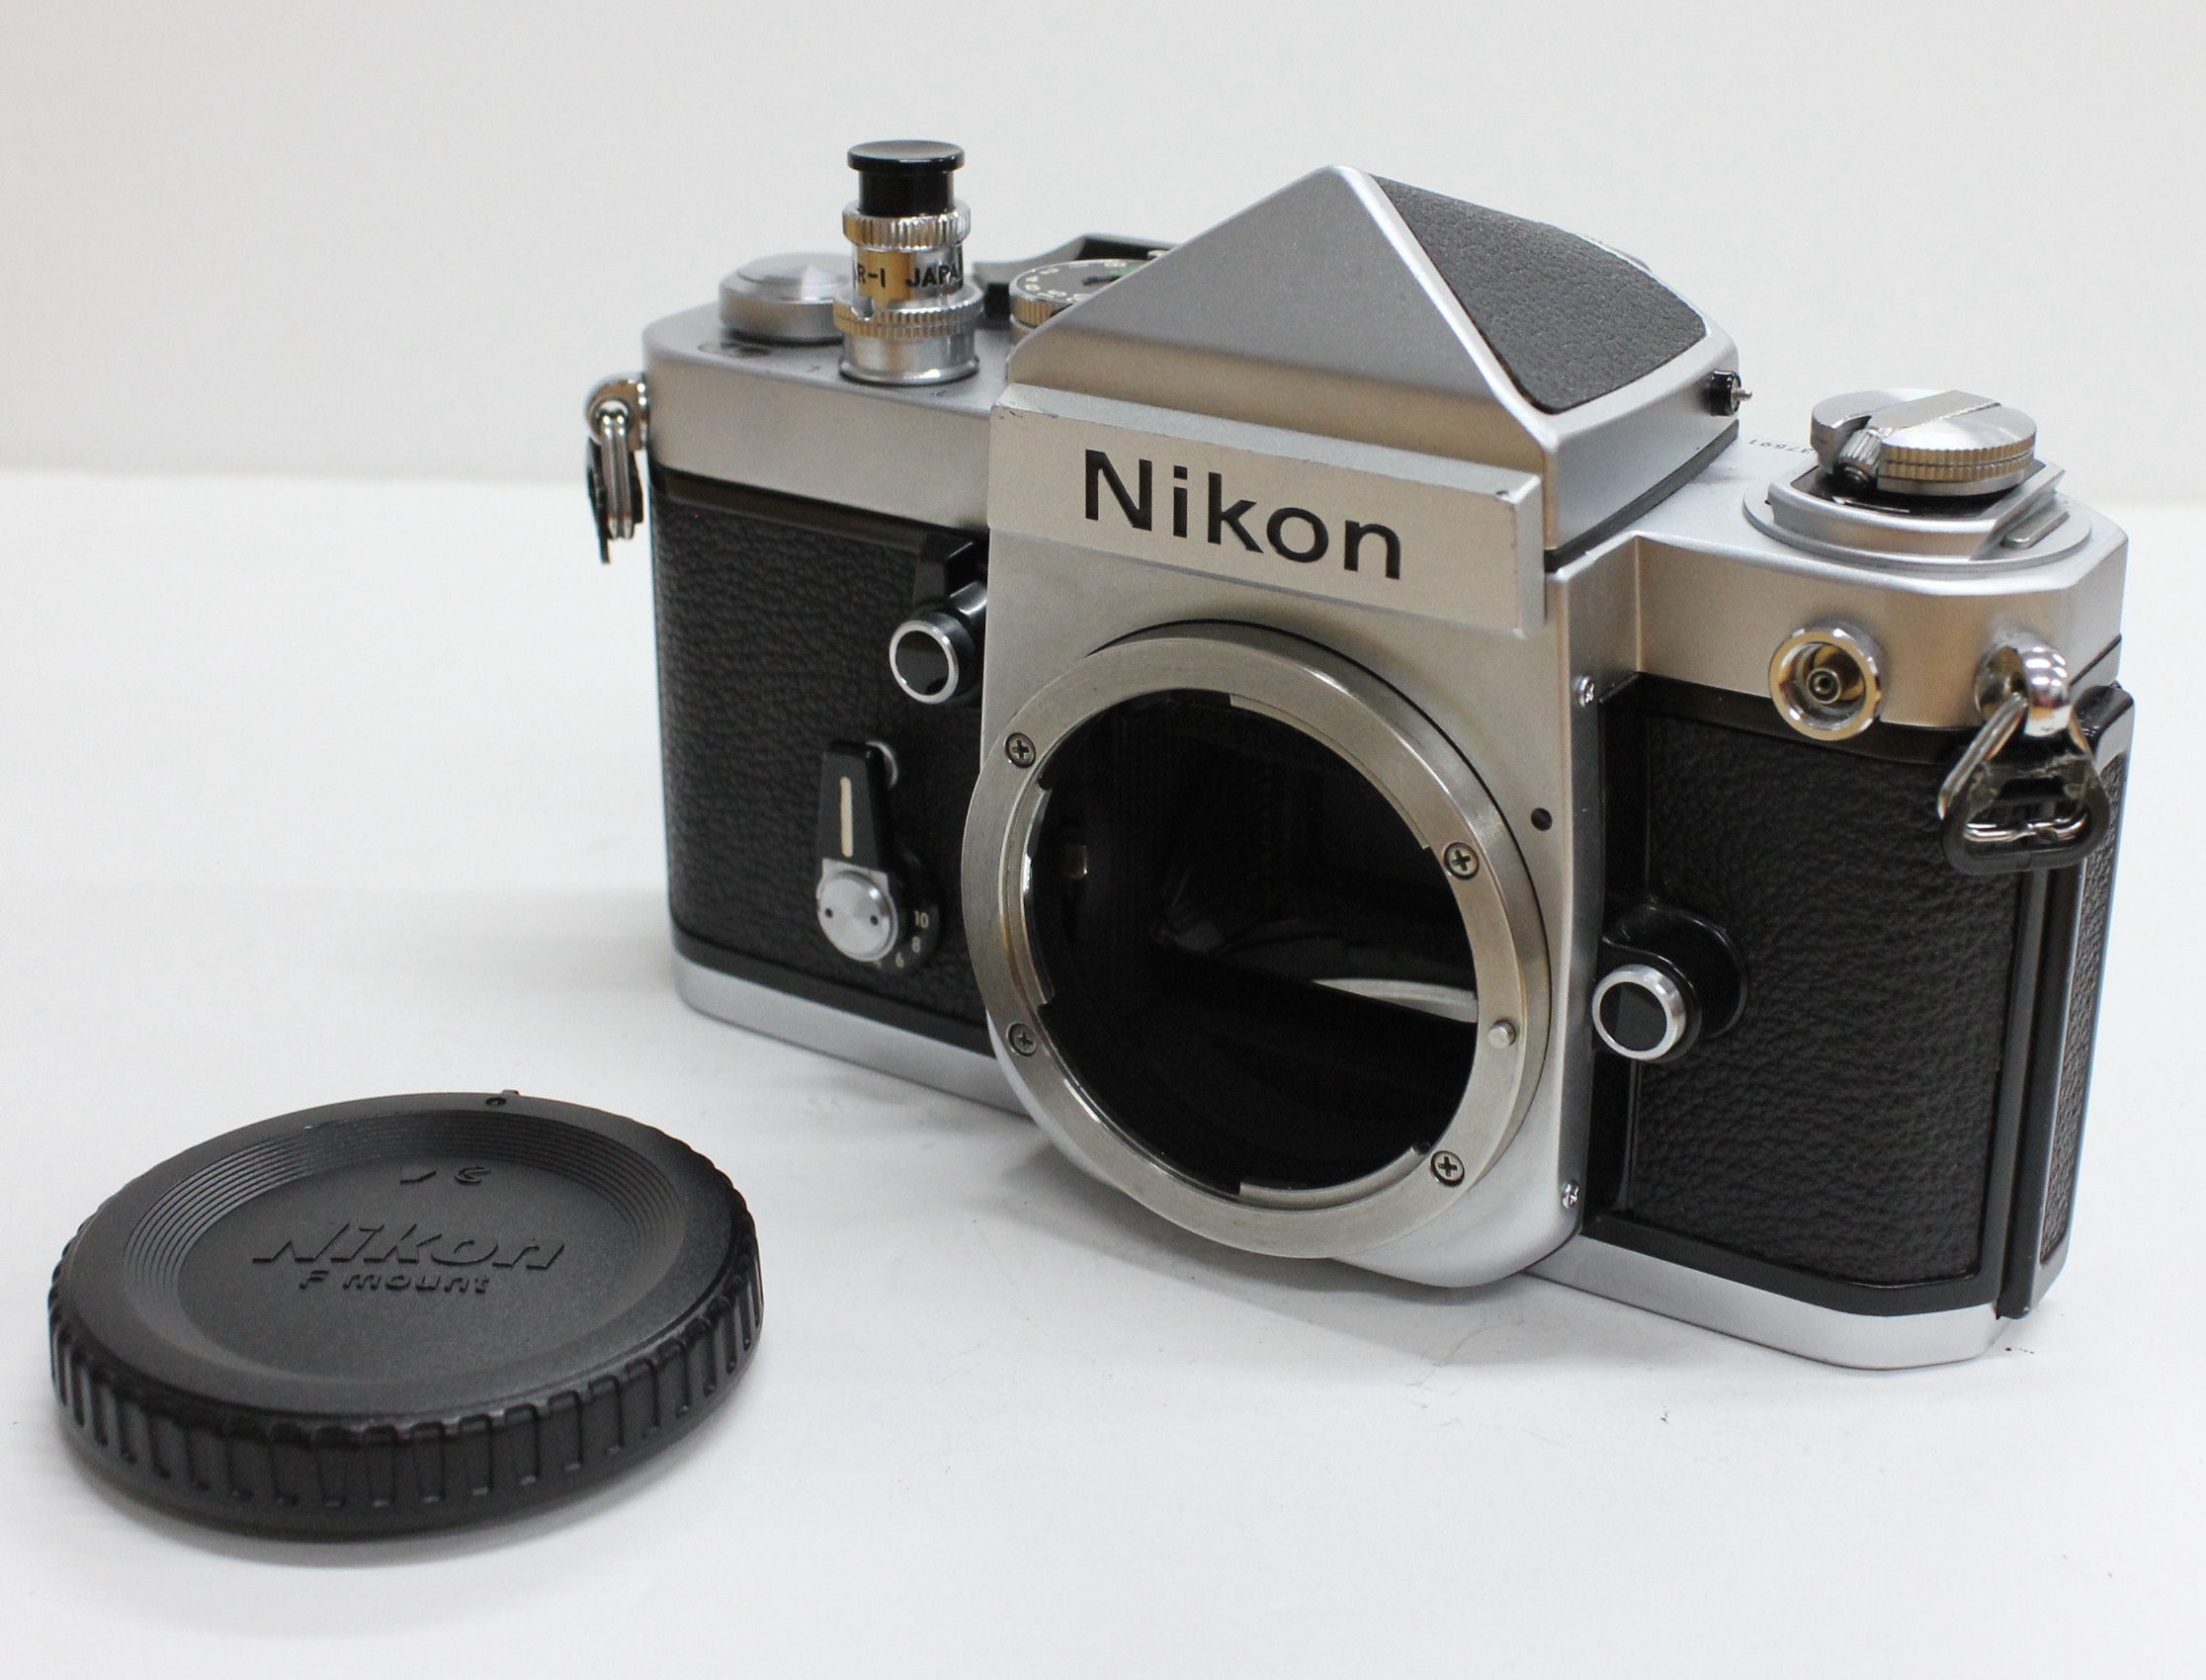 Japan Used Camera Shop | [Near Mint] Nikon F2 Eye Level 35mm SLR Film Camera w/ DE-1 View Finder S/N 803** from Japan